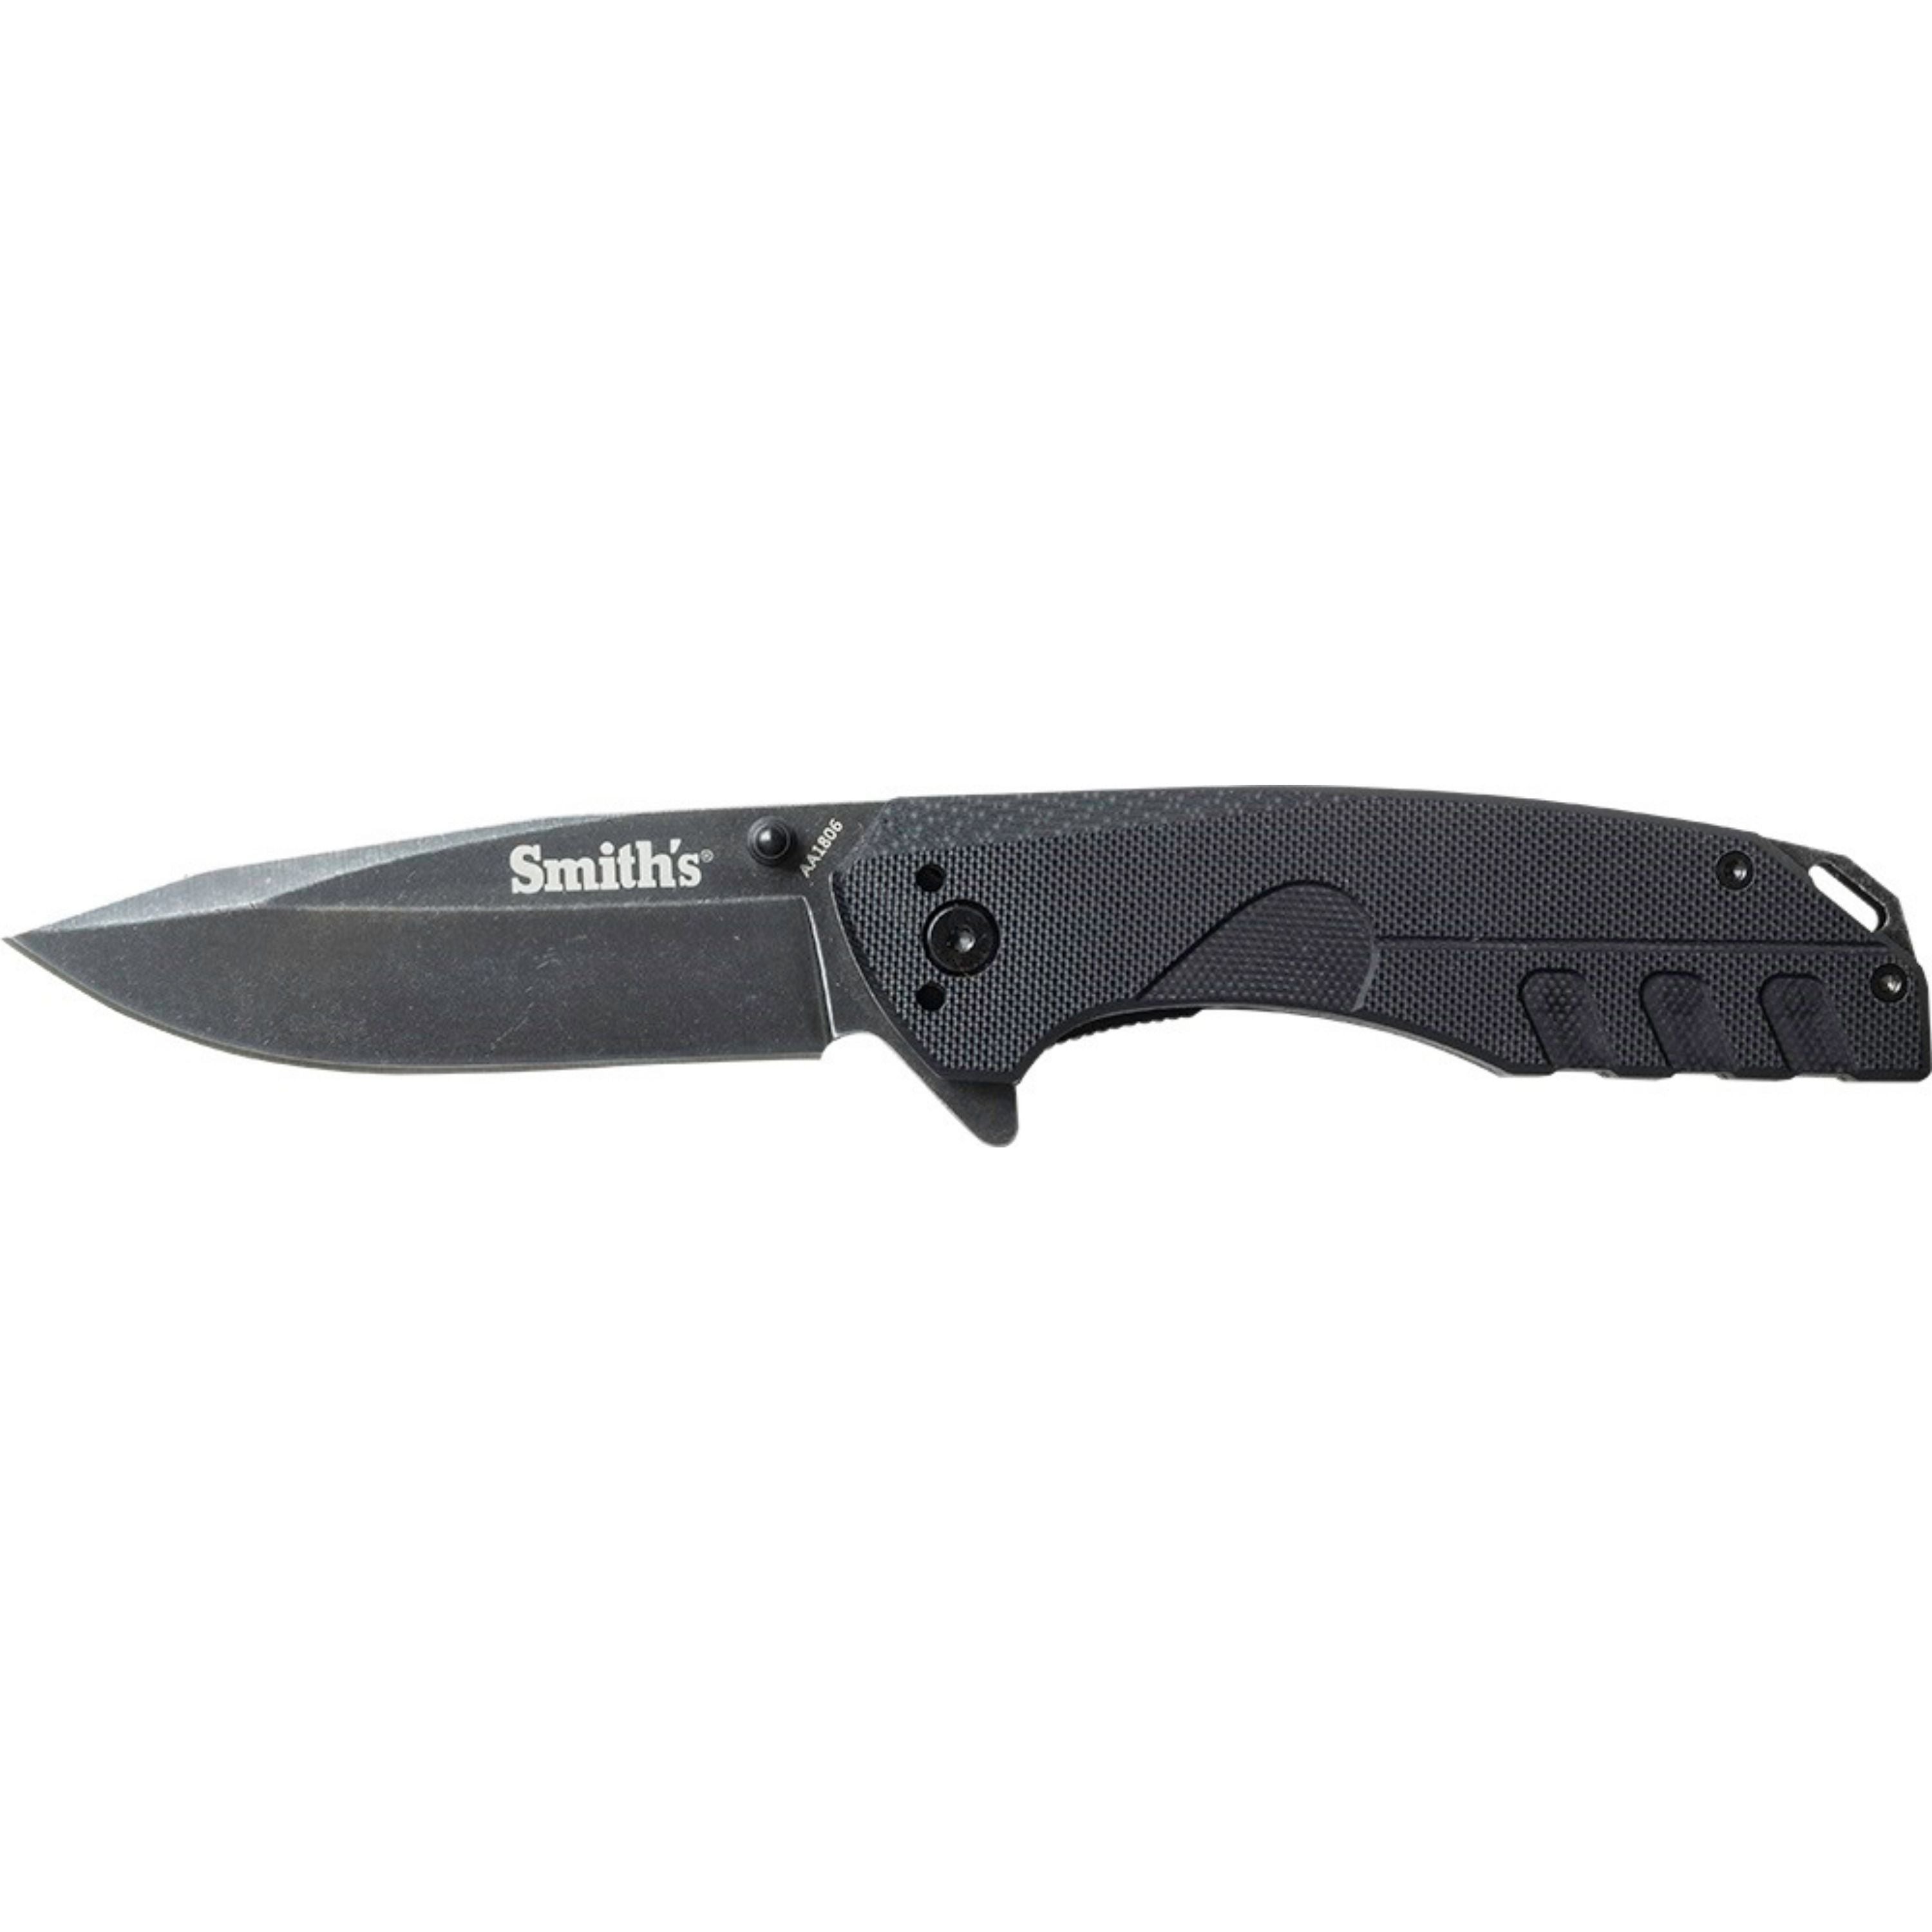 "Battleplan black" knife